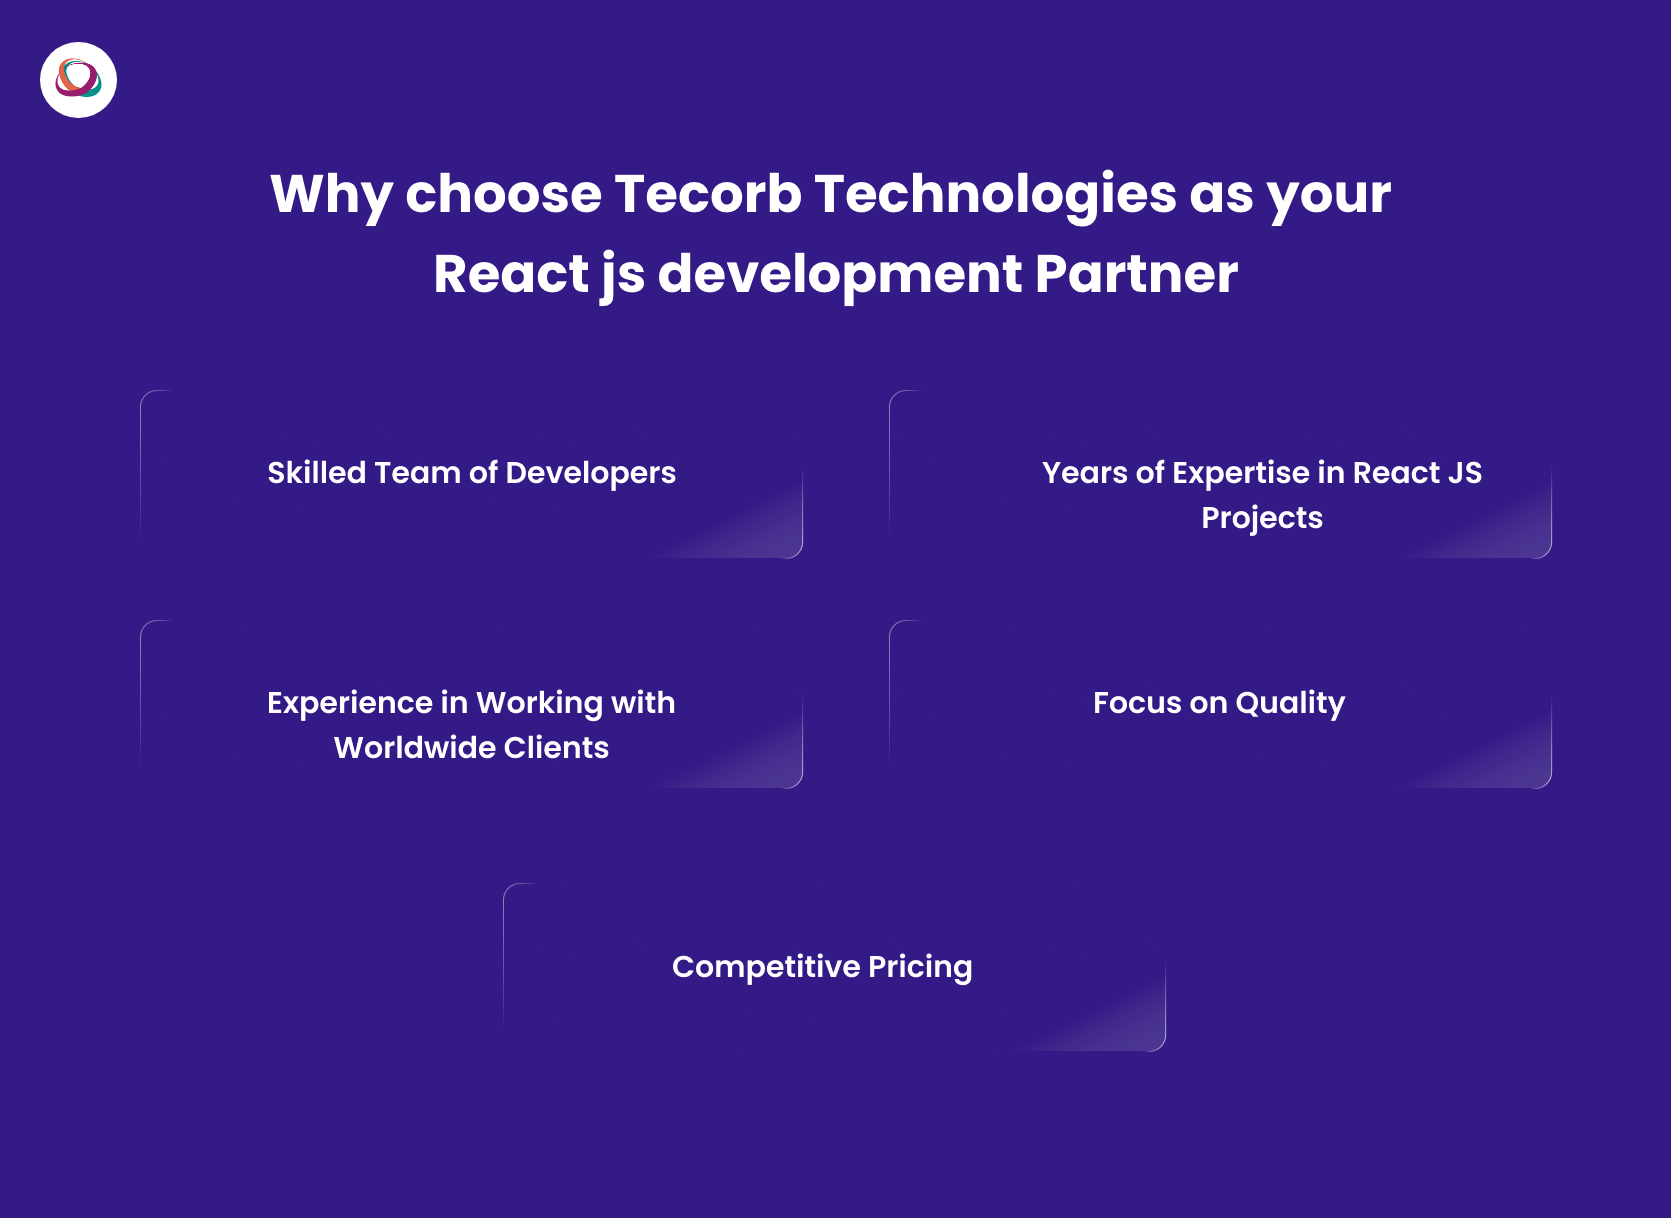 Why choose Tecorb Technologies as your React js development Partner? 